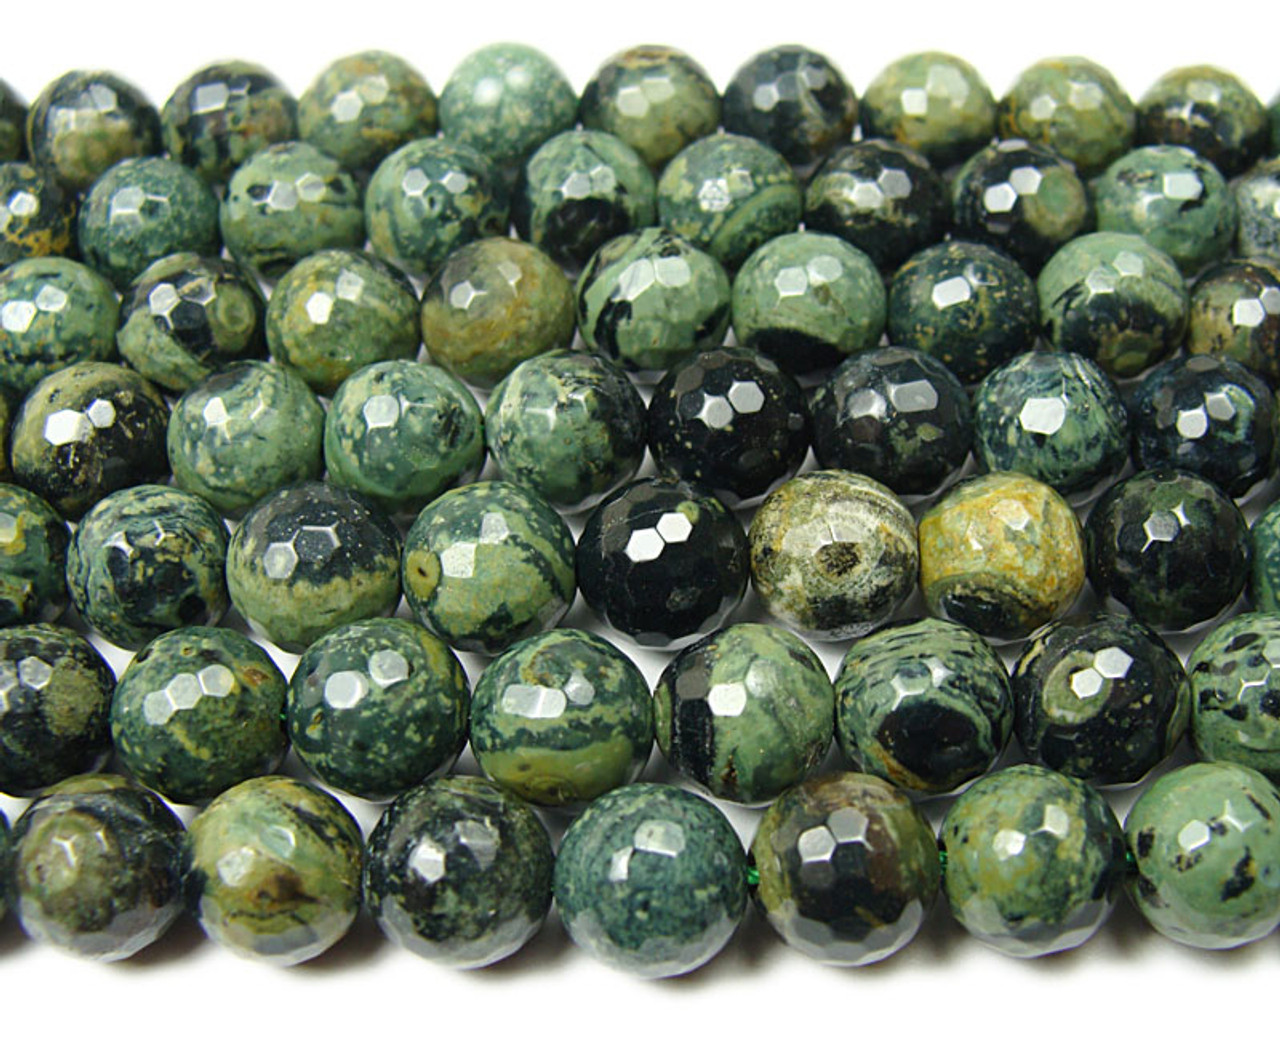 8mm Round Jade Stone Bead - Deep Green